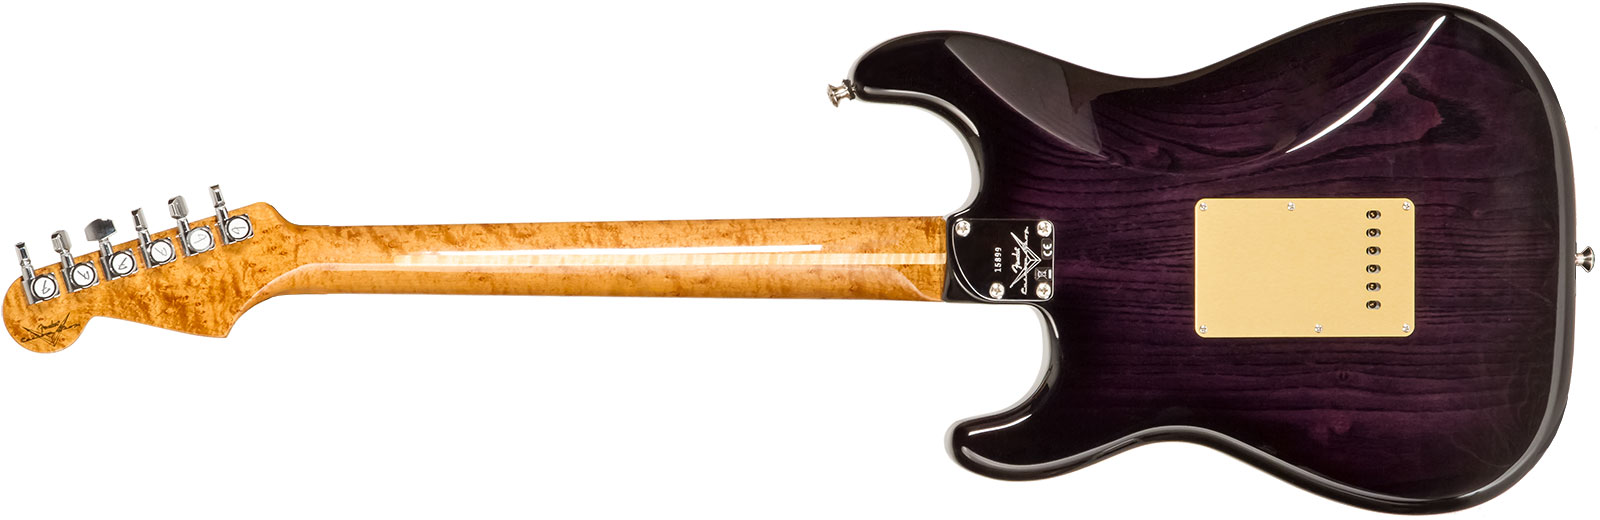 Fender Custom Shop Strat American Custom 3s Trem Mn #xn15899 - Nos Ebony Transparent - Guitare Électrique Forme Str - Variation 1